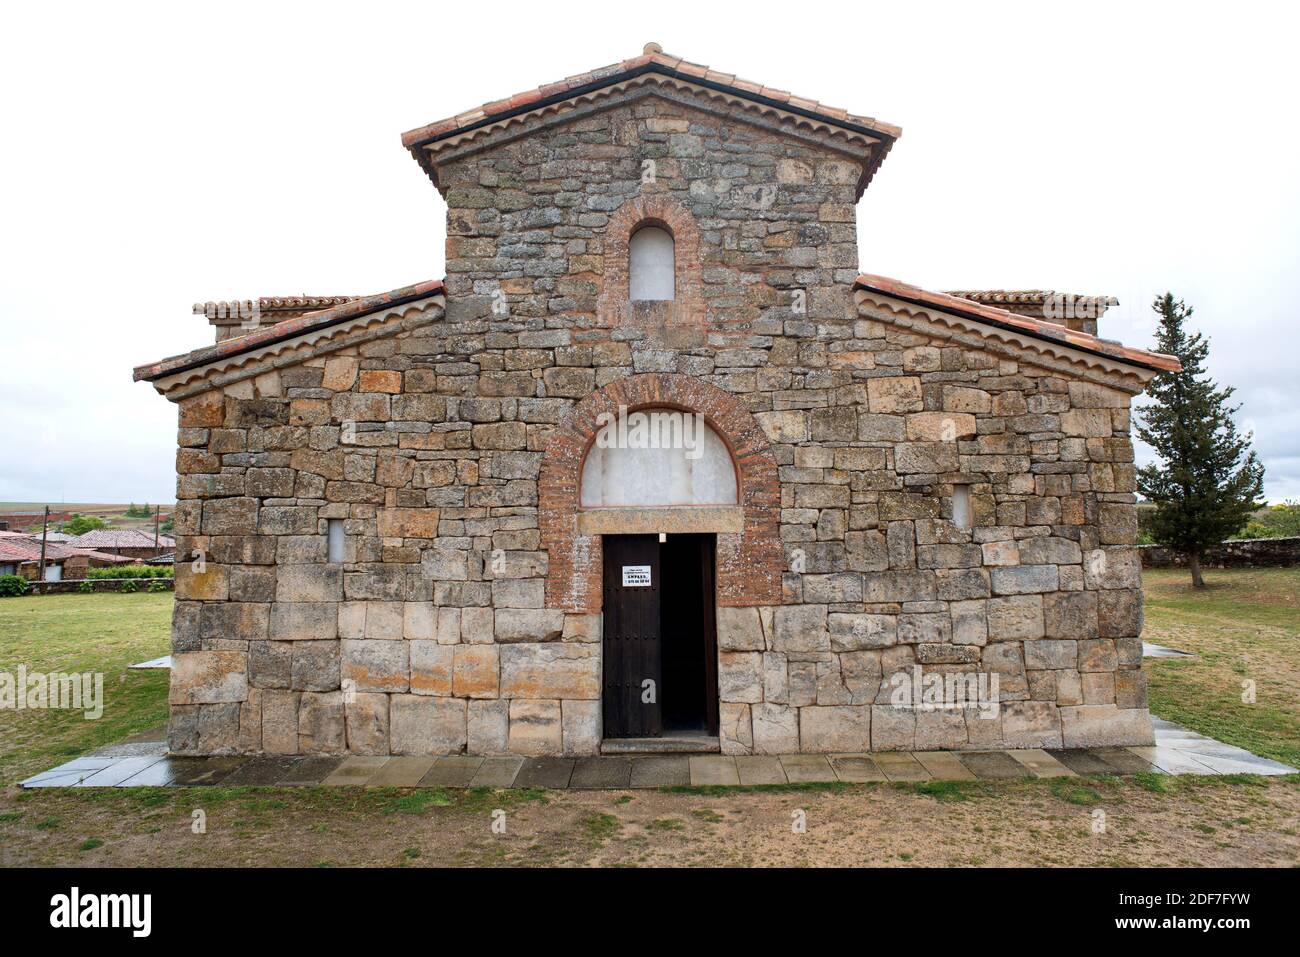 San Pedro de la Nave visigothic church 7-8th centuries. El Campillo, Zamora province, Castilla y Leon, Spain. Stock Photo